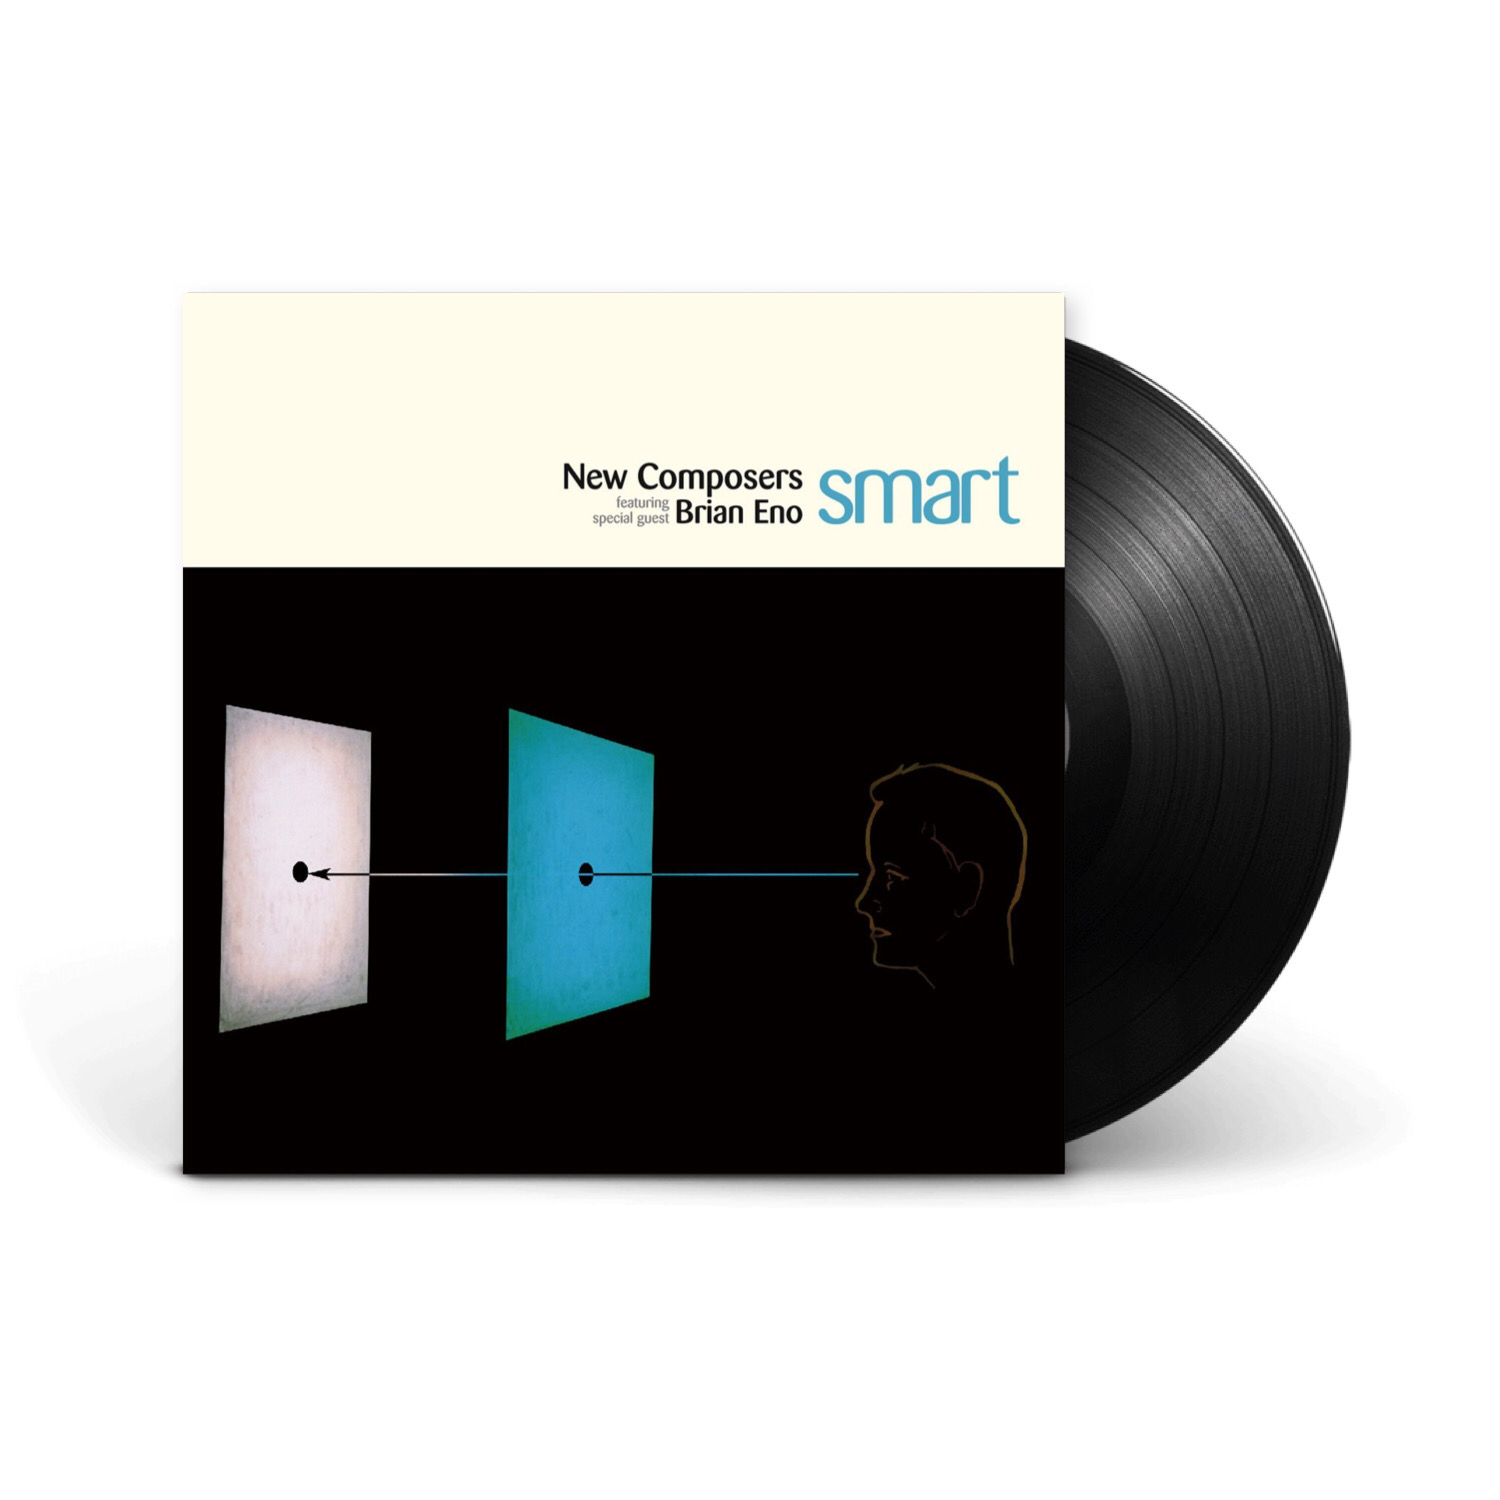 Вінілова платівка LP: Новые Композиторы feat. Brian Eno — «Smart» (1997/2020) [Black Vinyl]